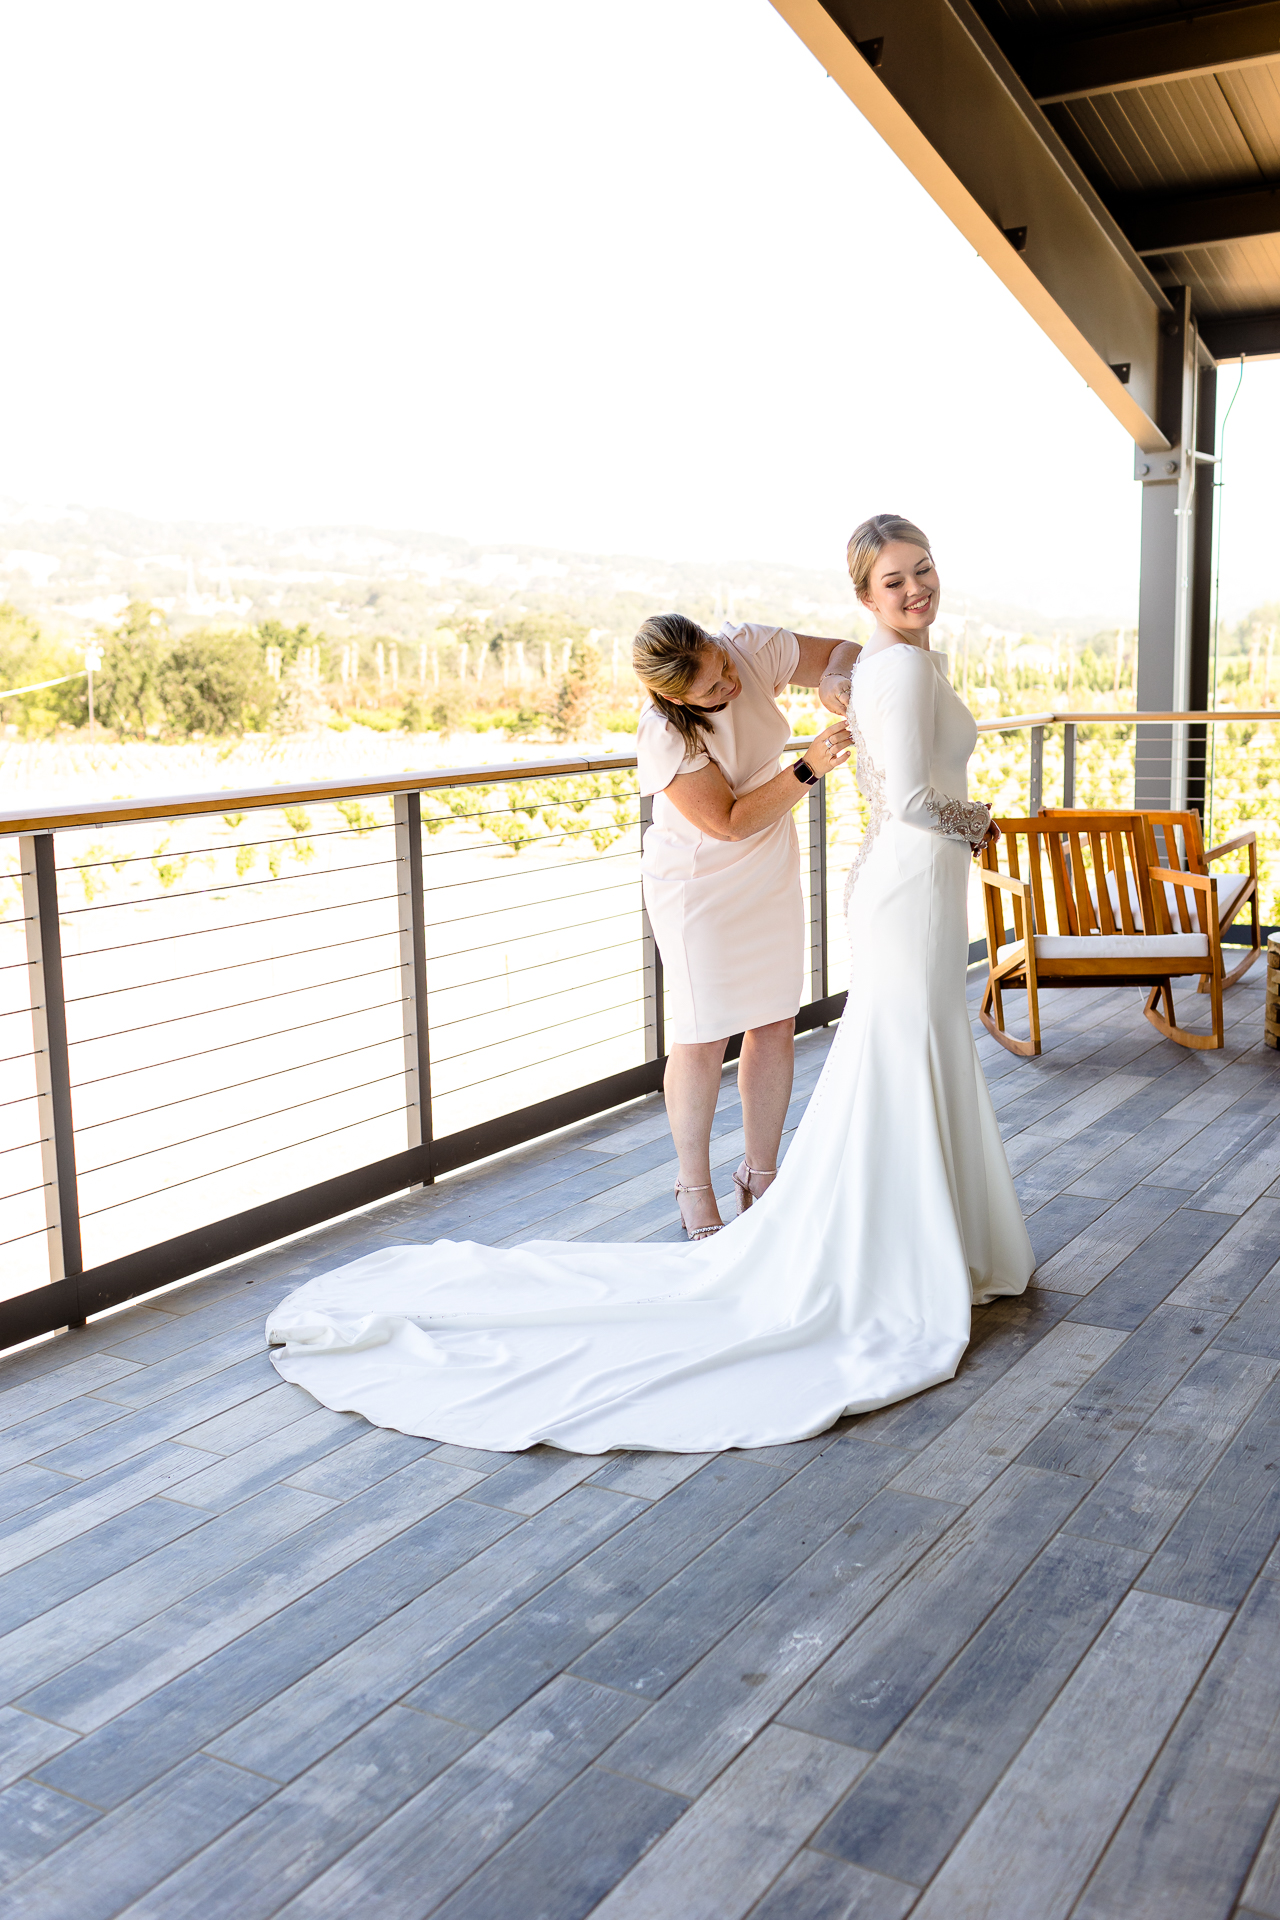 BackRoad Vines wedding - mom zipping bride into dress